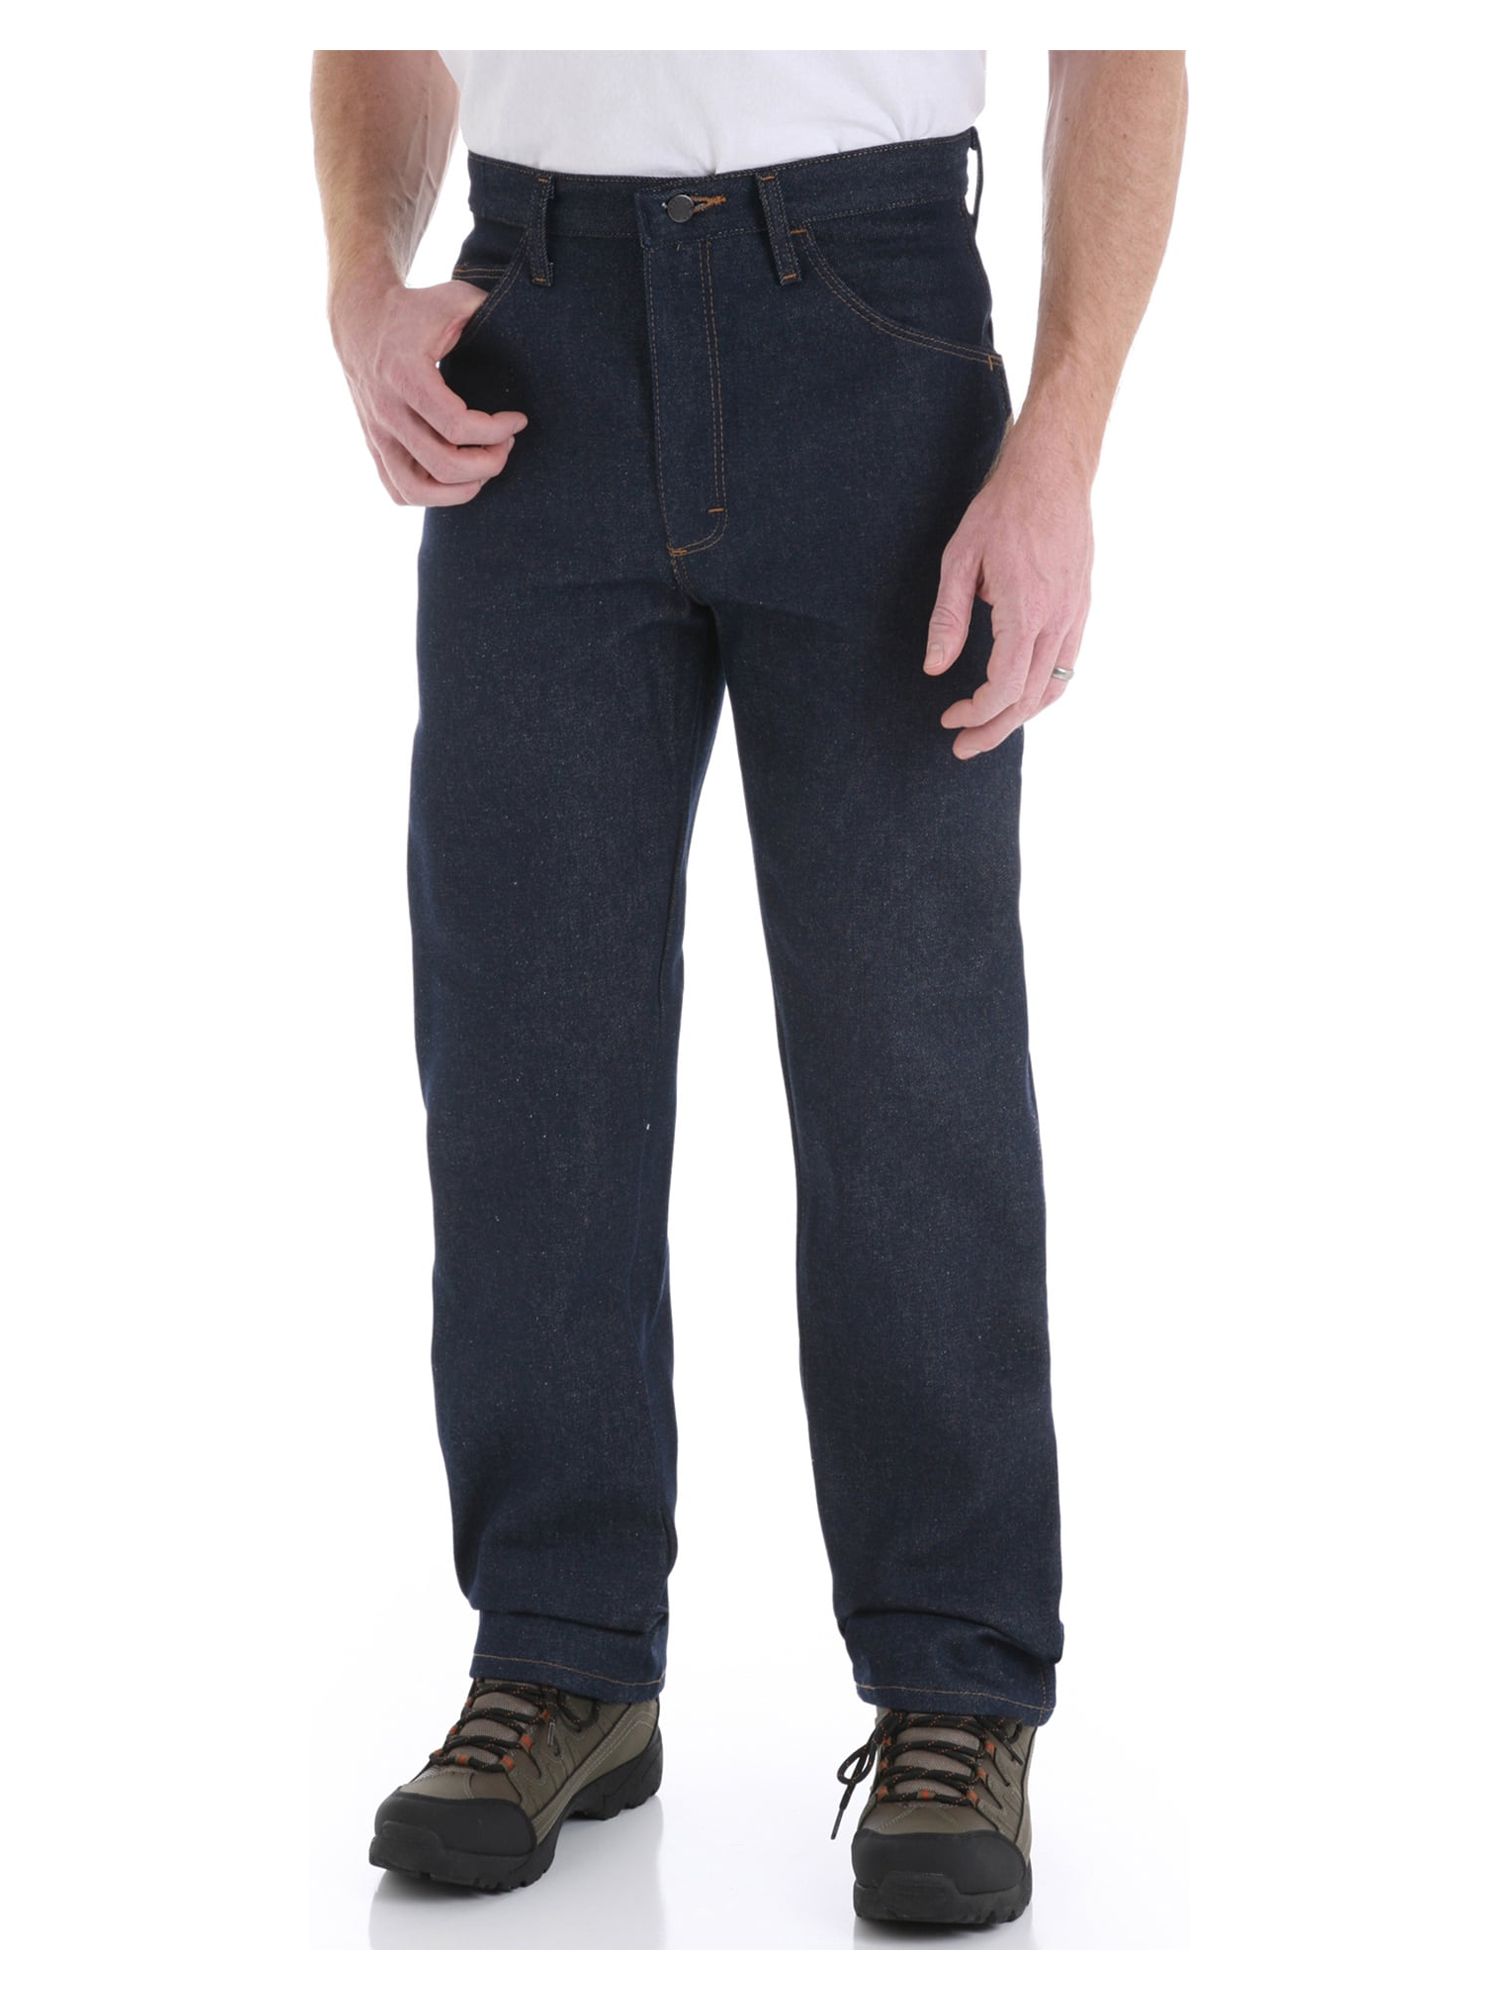 Wrangler Rustler Men's and Big Men's Regular Fit Boot Cut Cotton Jeans - image 1 of 3